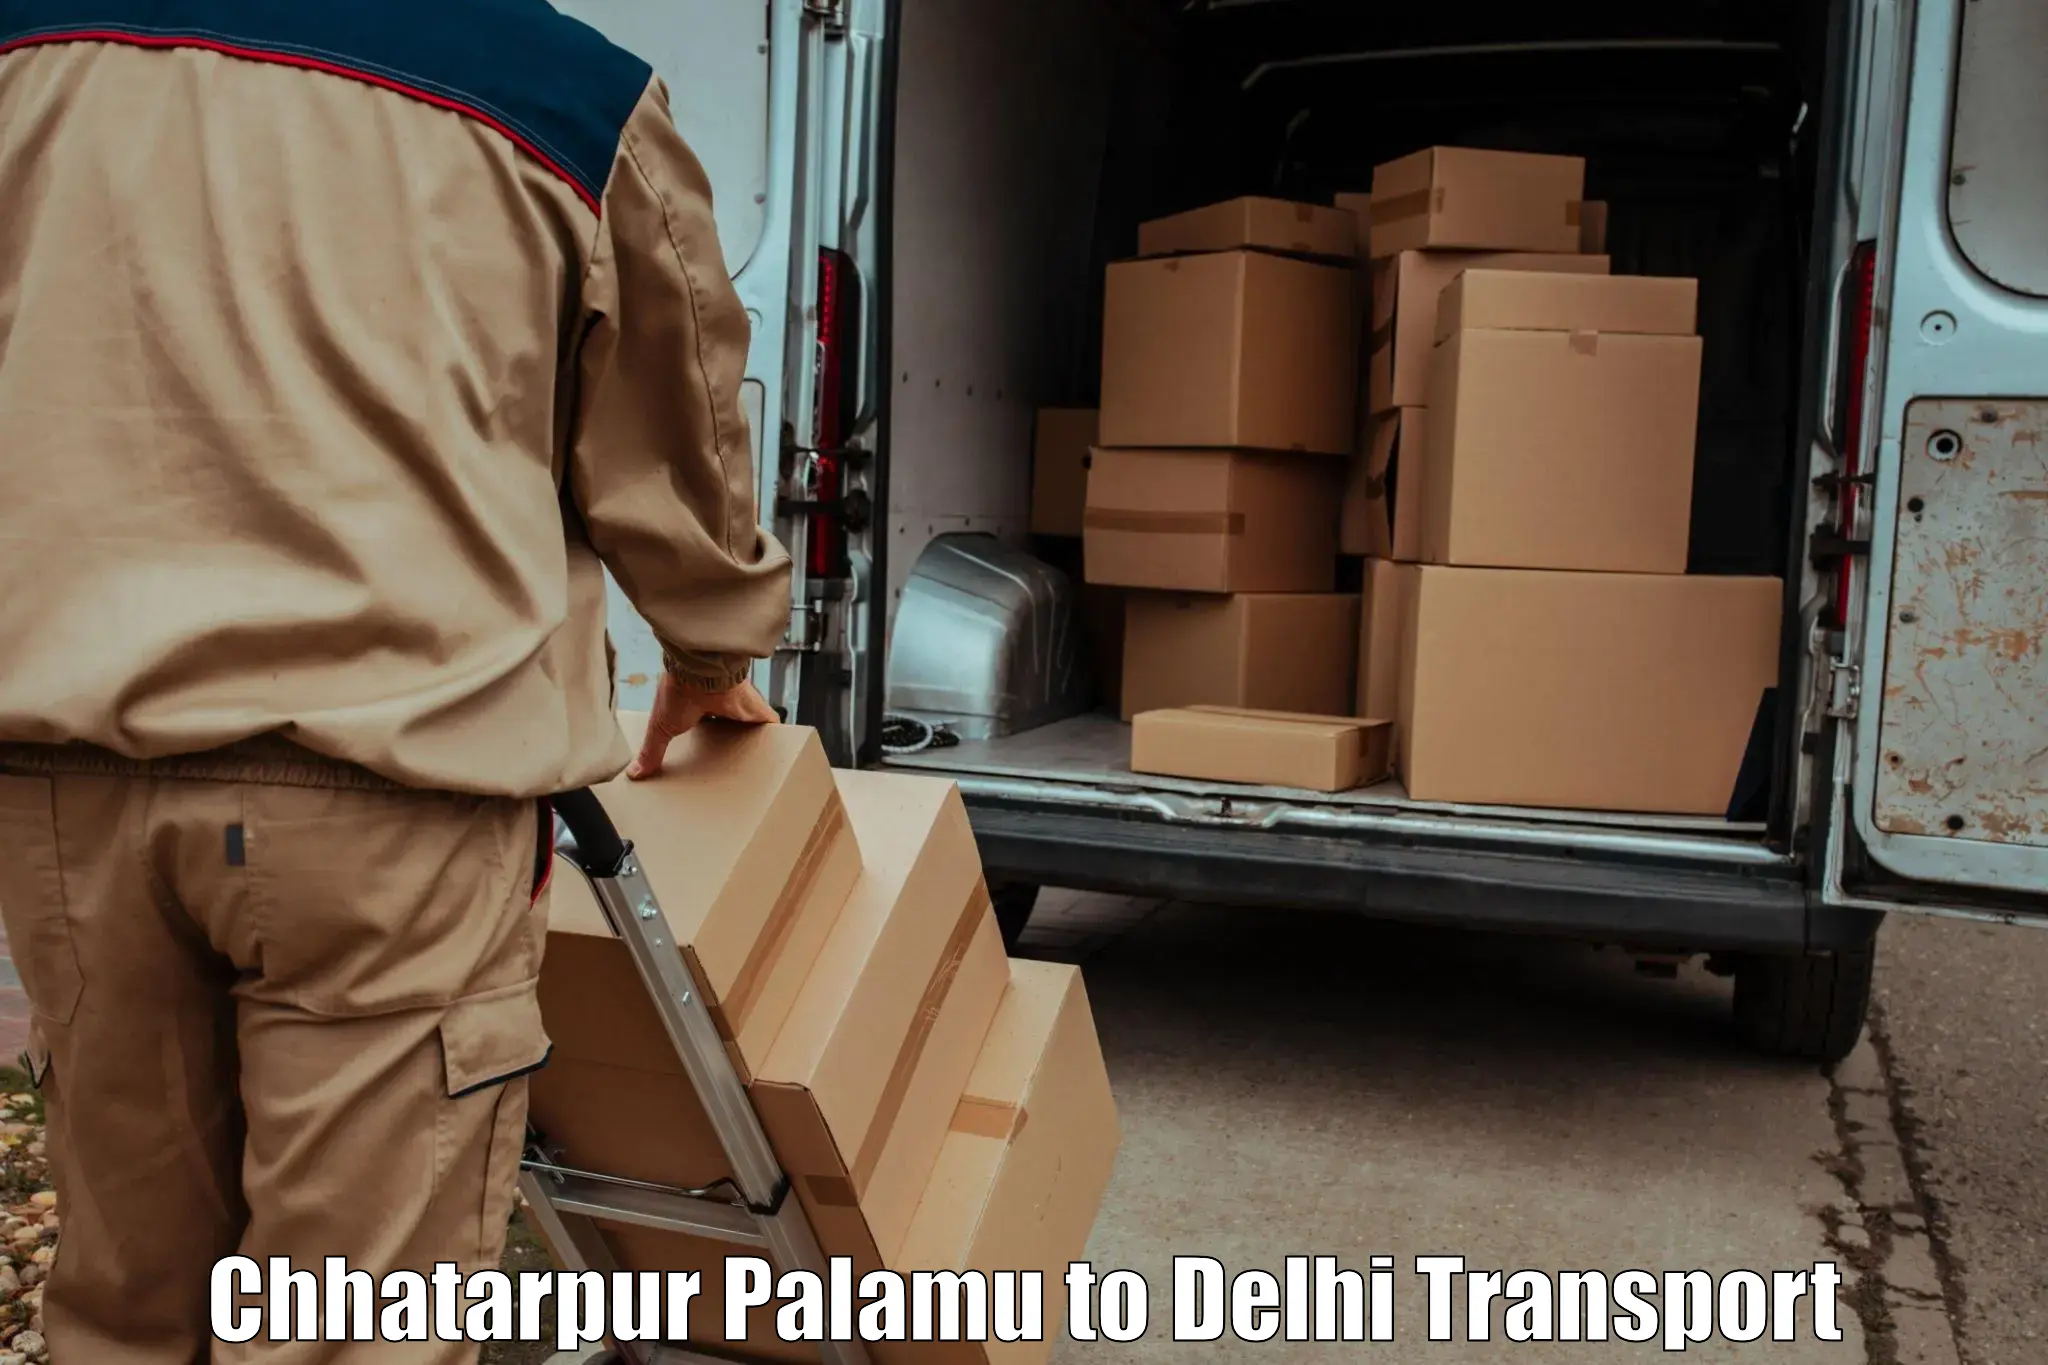 Goods delivery service Chhatarpur Palamu to East Delhi